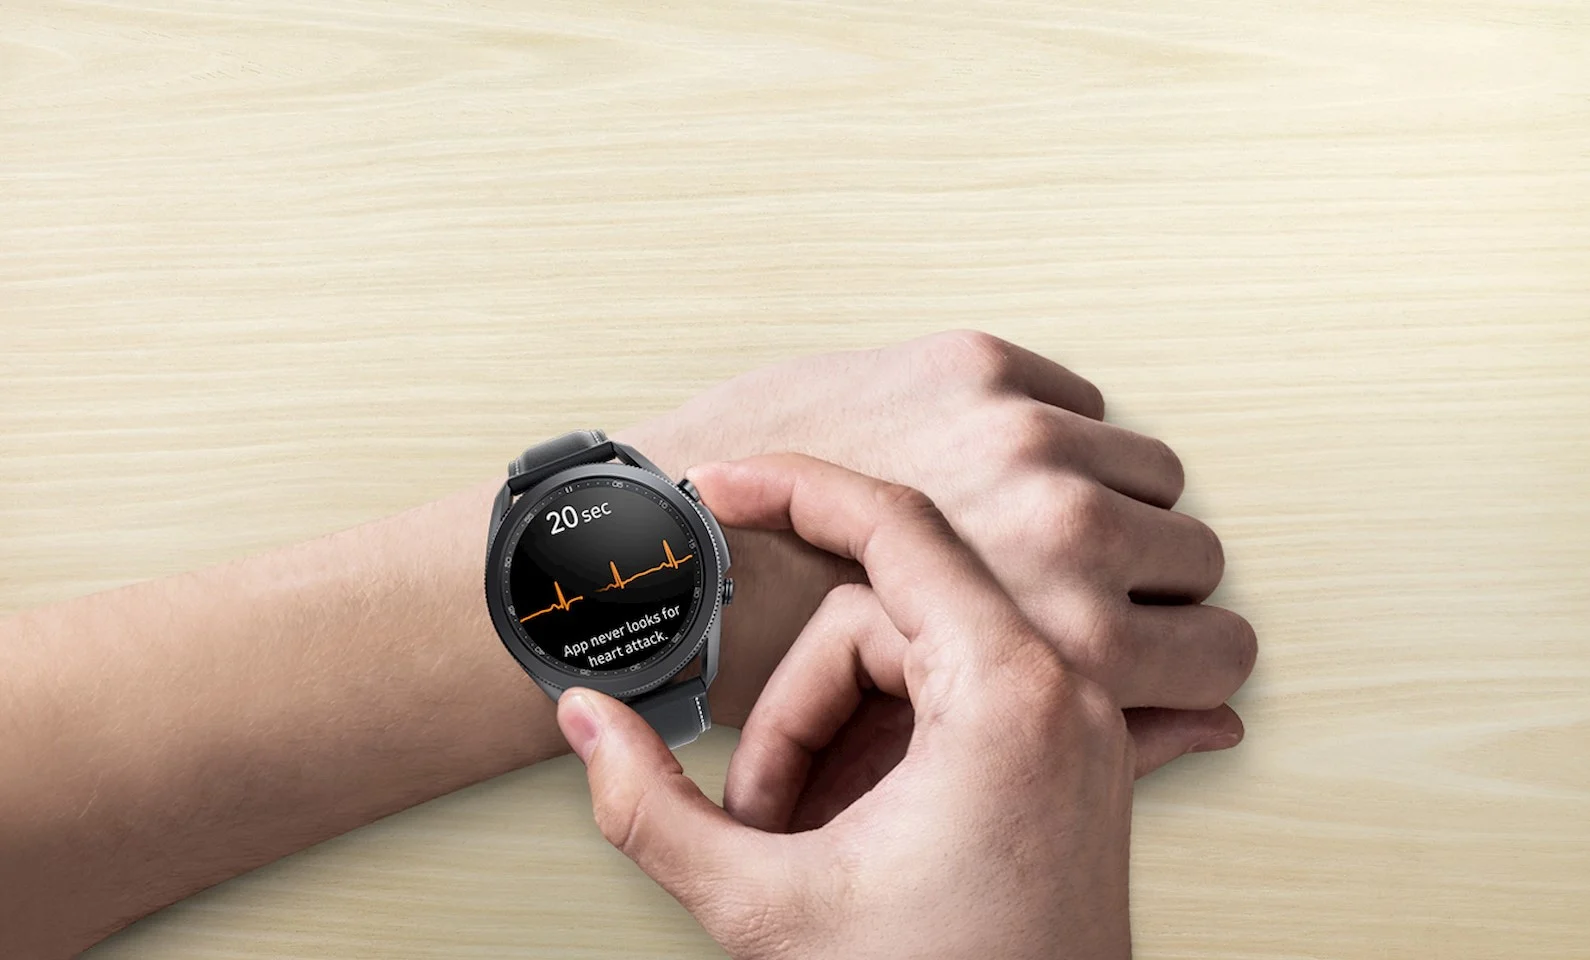 Samsung Galaxy Watch 3 ECG feature